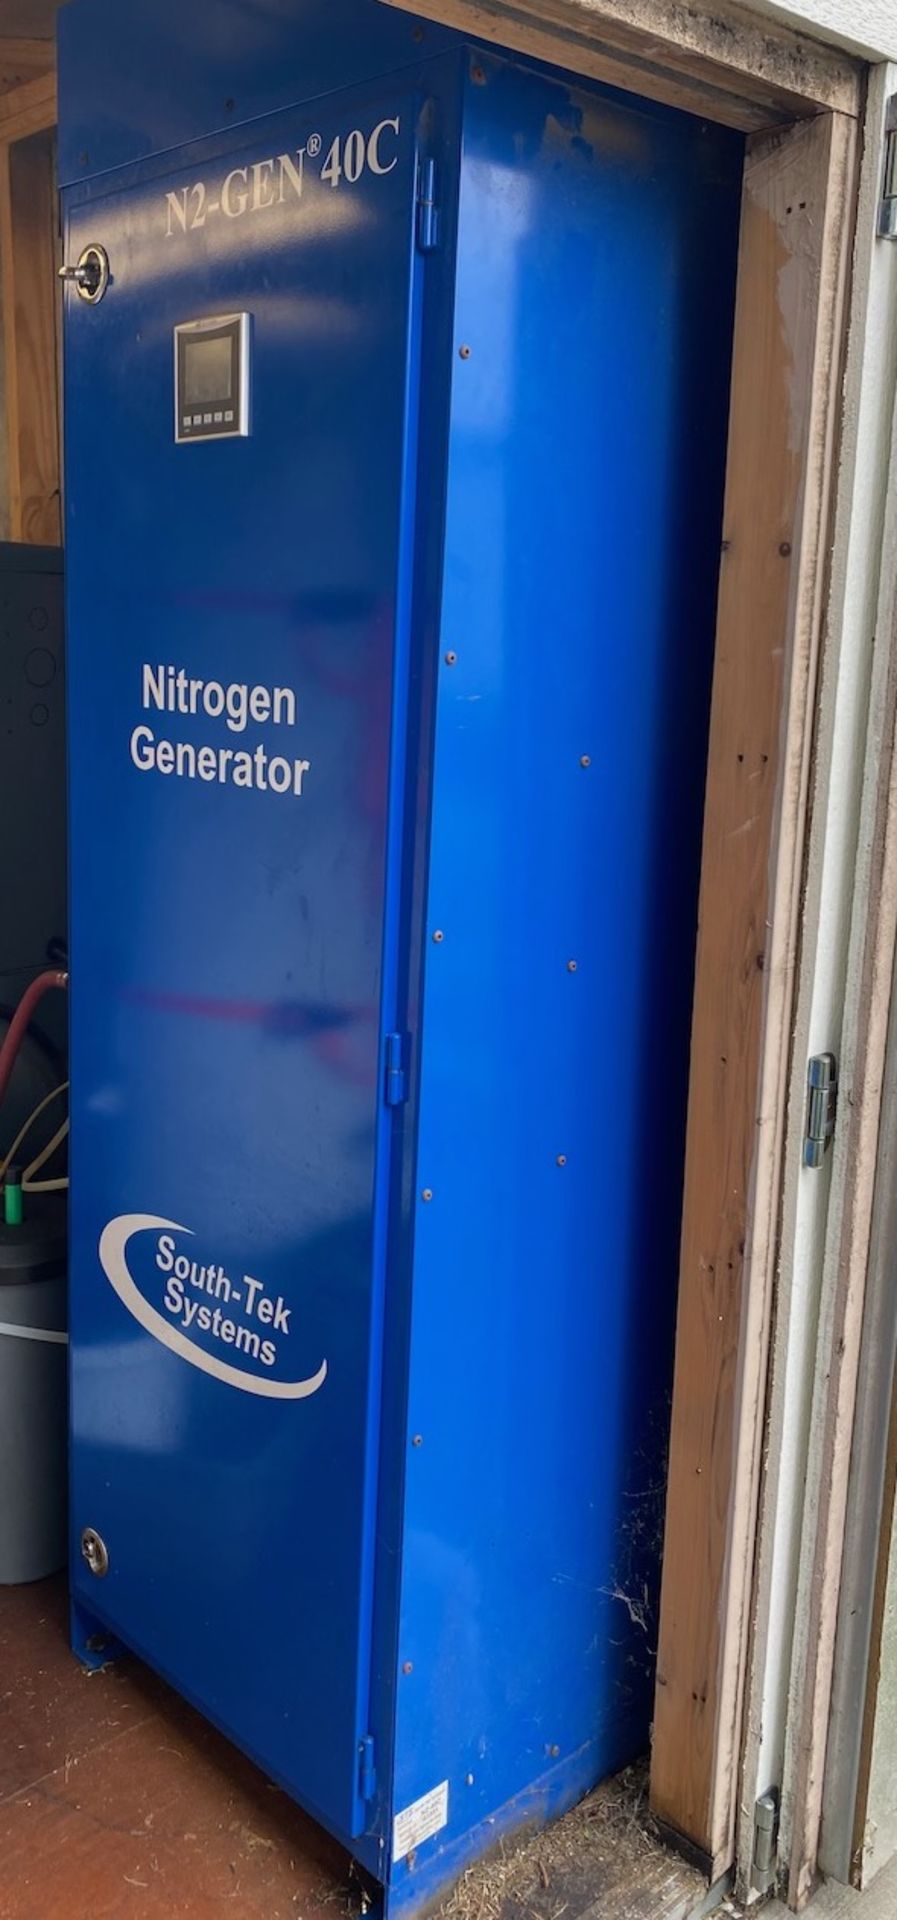 South-Tek Systems Nitrogen Generator